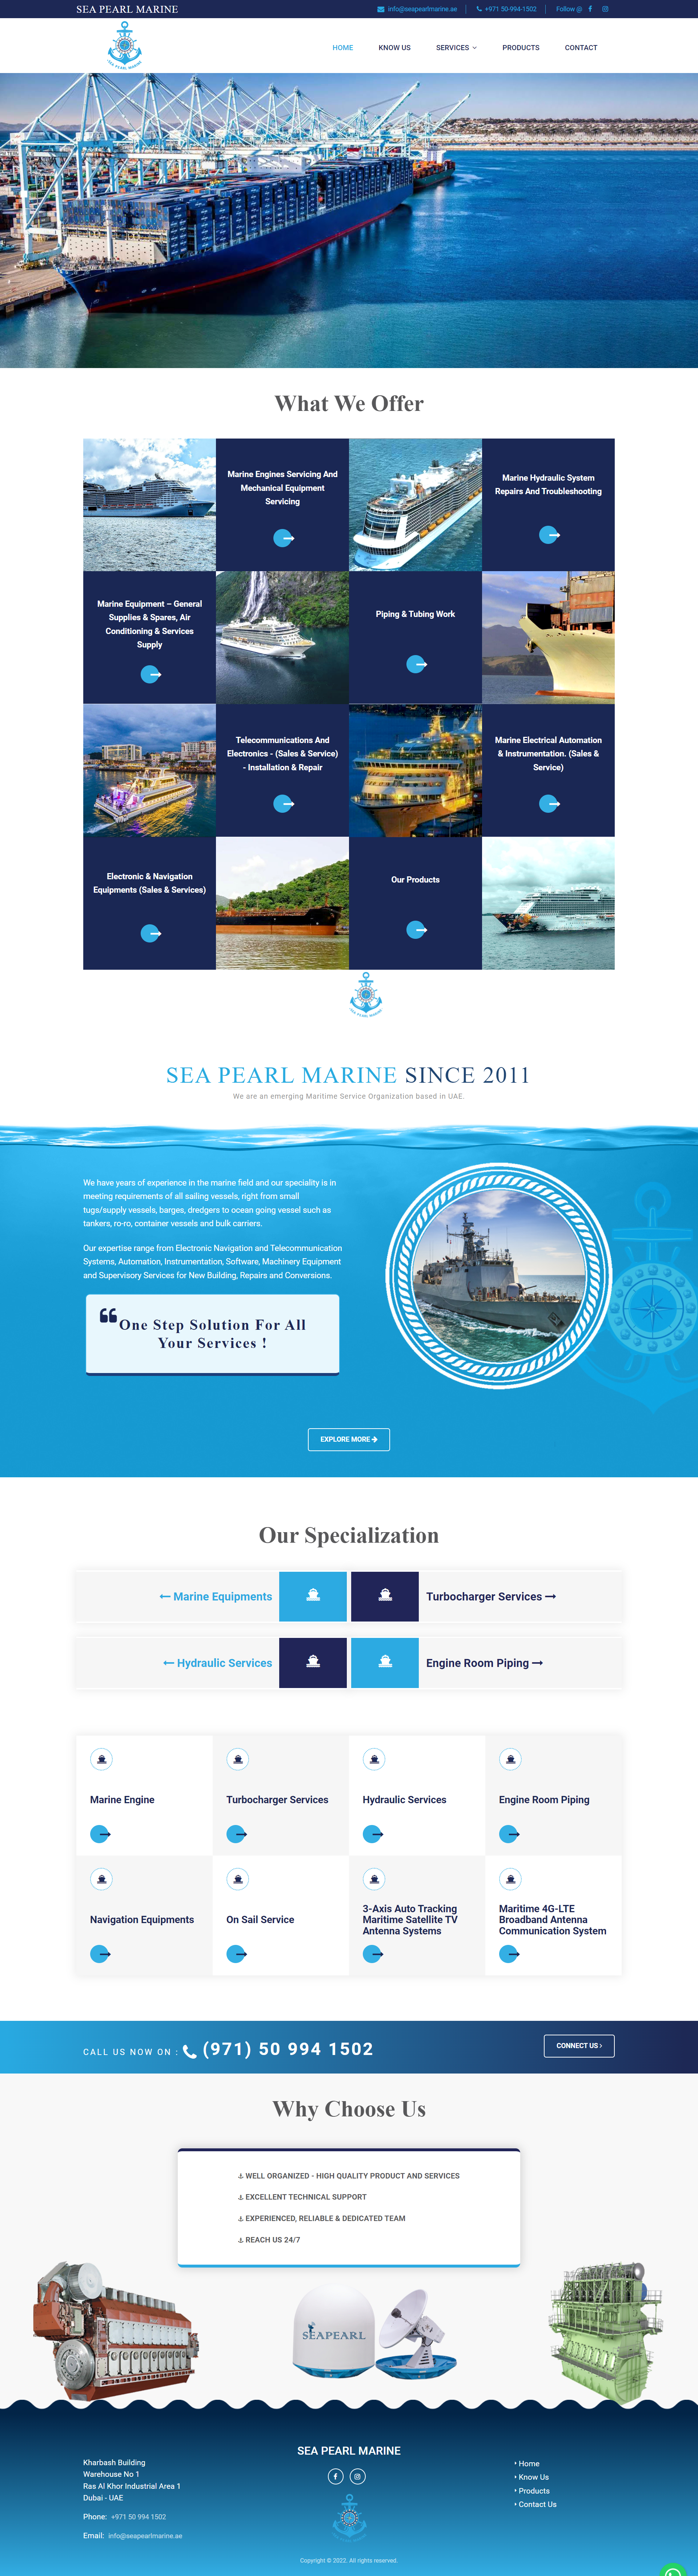 Seapearl Marine